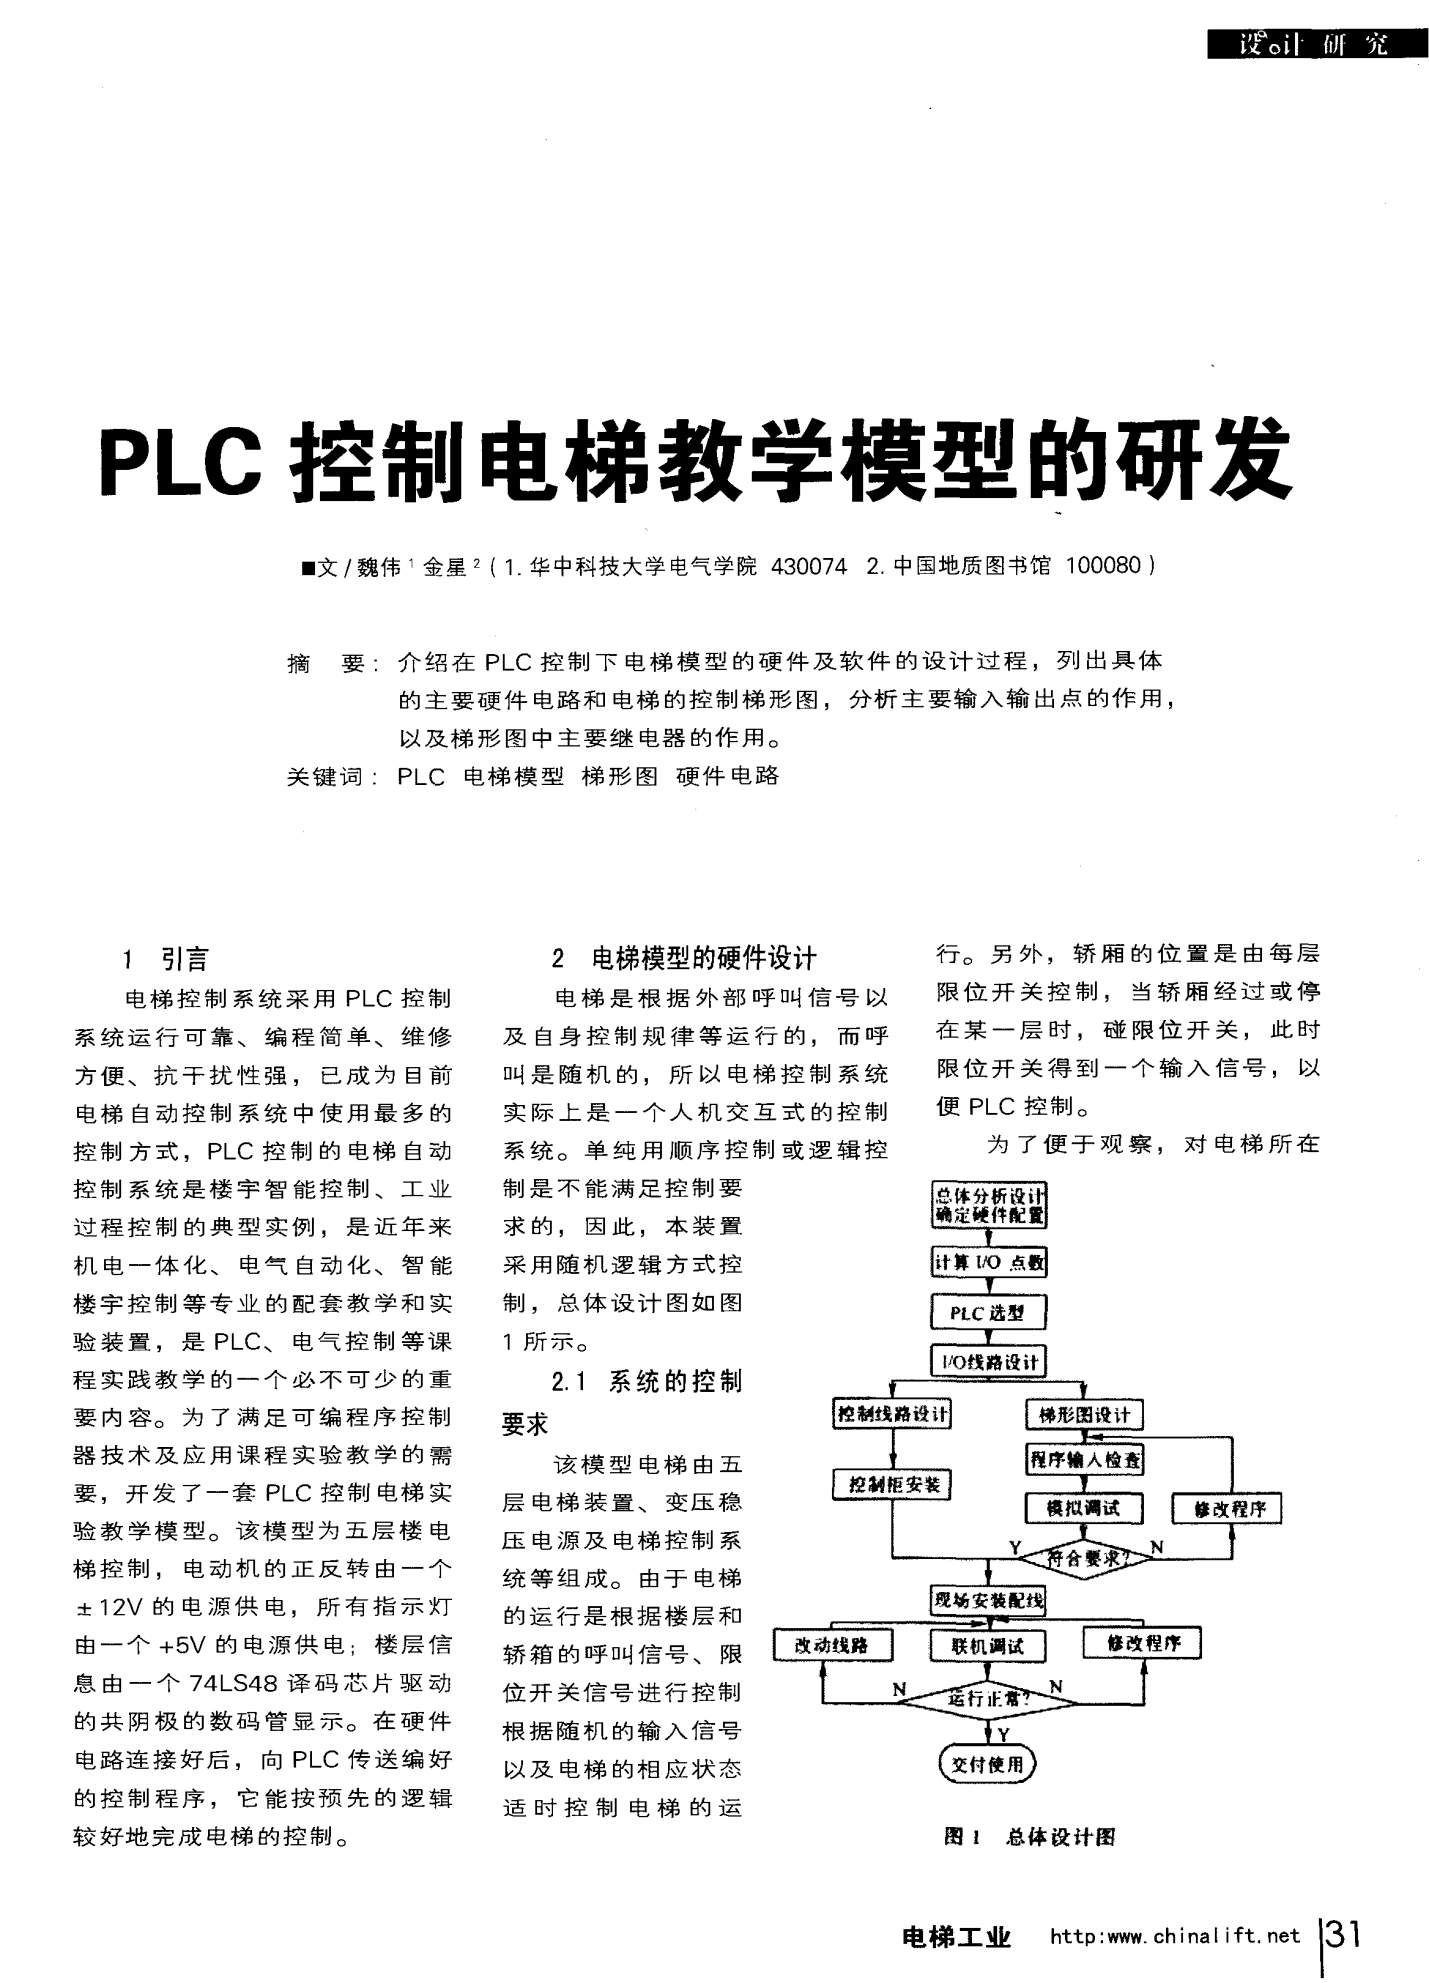 PLC控制电梯教学模型的研发